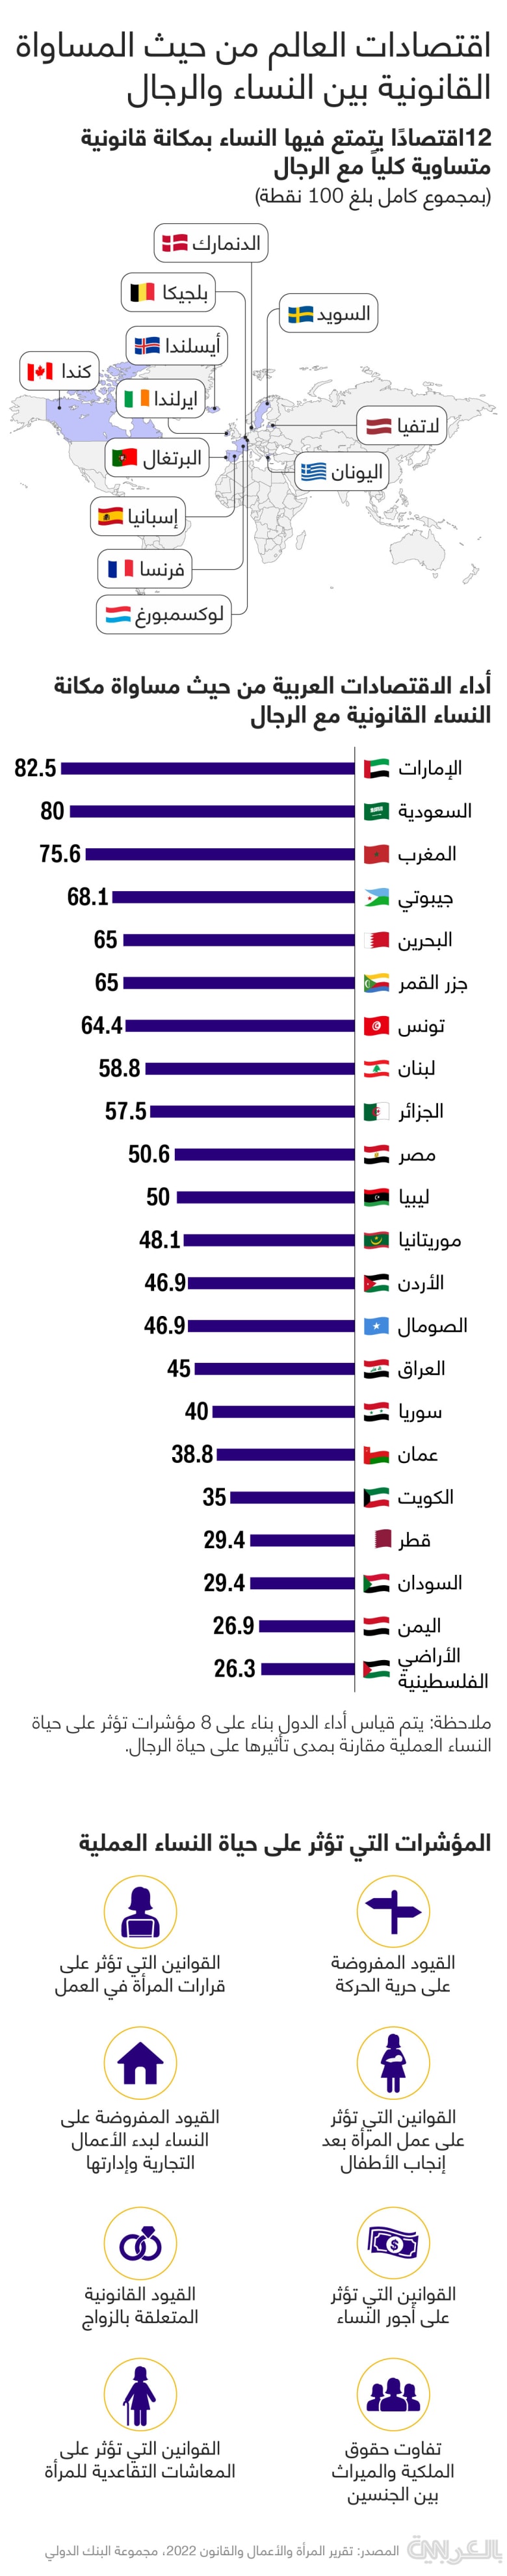 arab-top-economies-in-women-equality-22